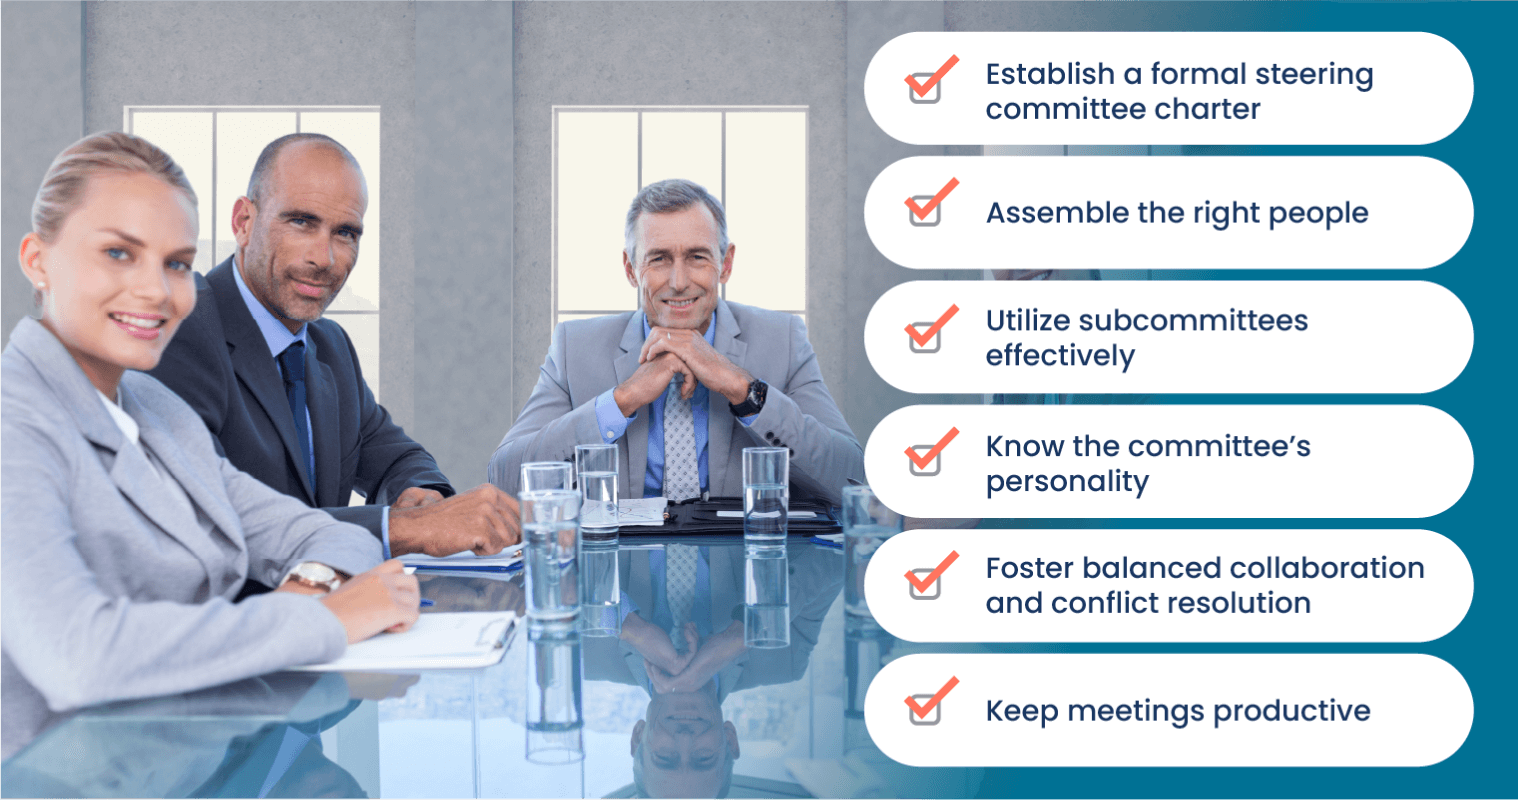 Best Practices to Run an Effective Steering Committee